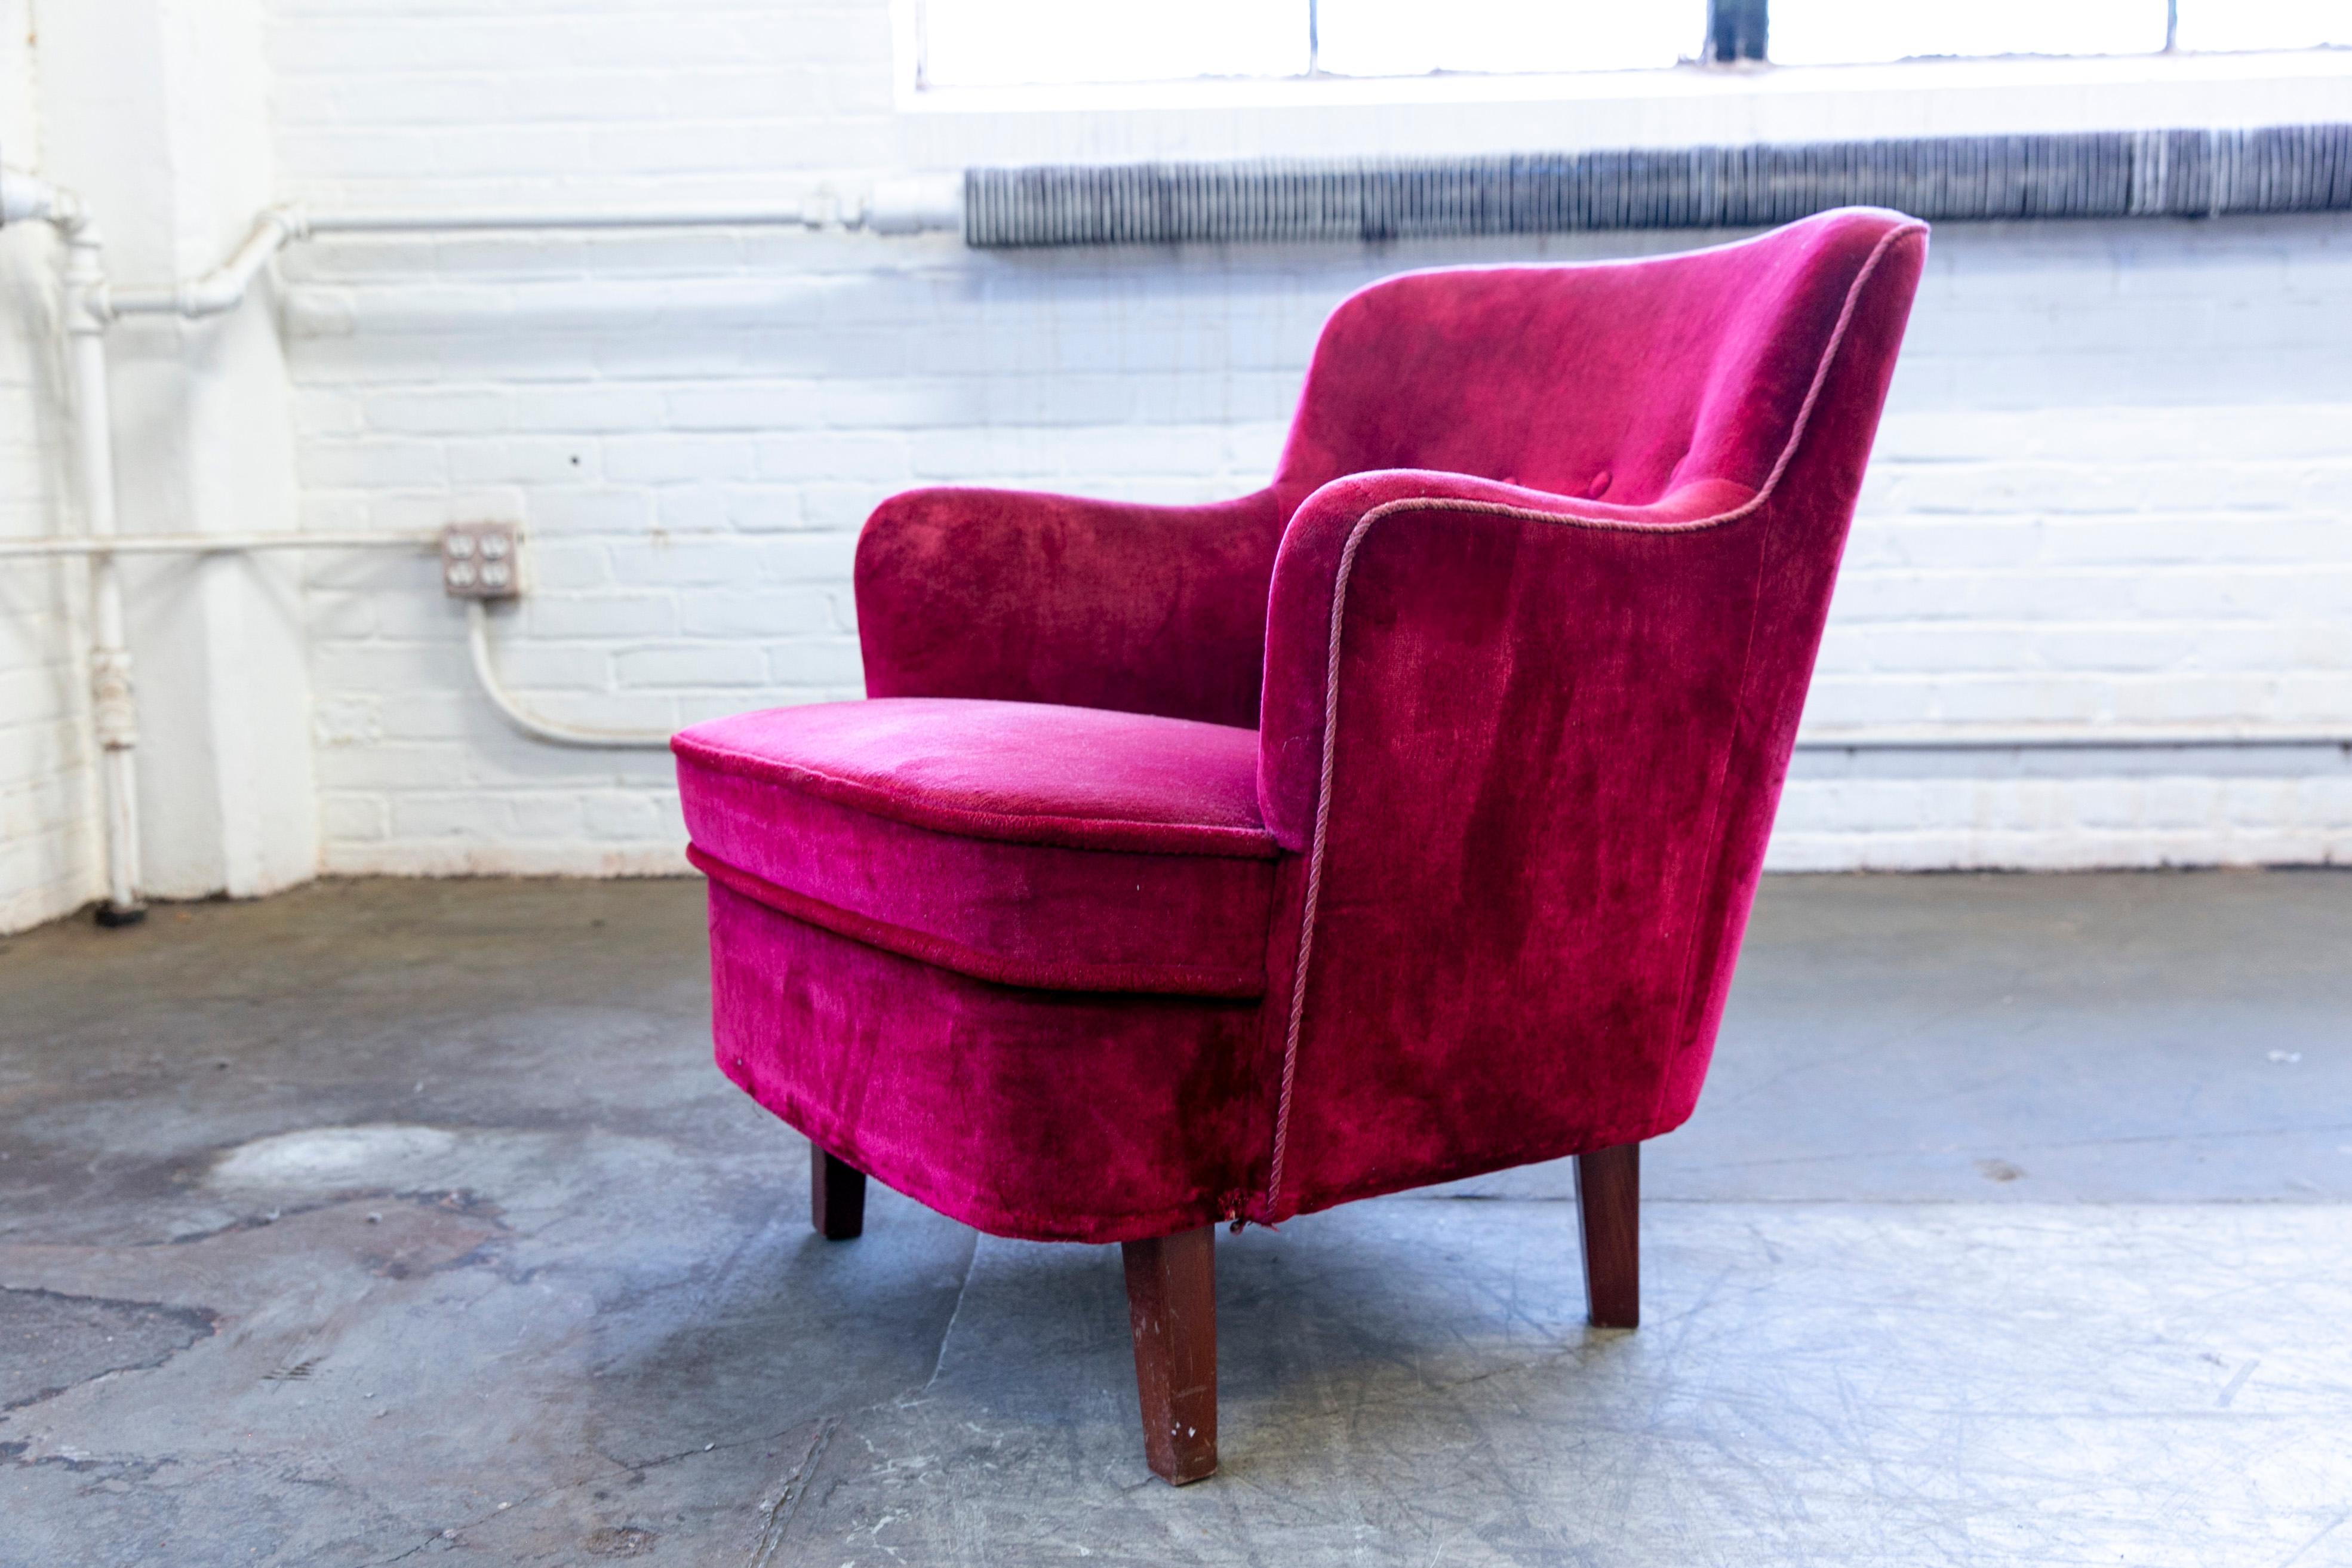 Mohair Peter Hvidt Orla Molgaard Style Classic Danish 1950s Lounge Chair